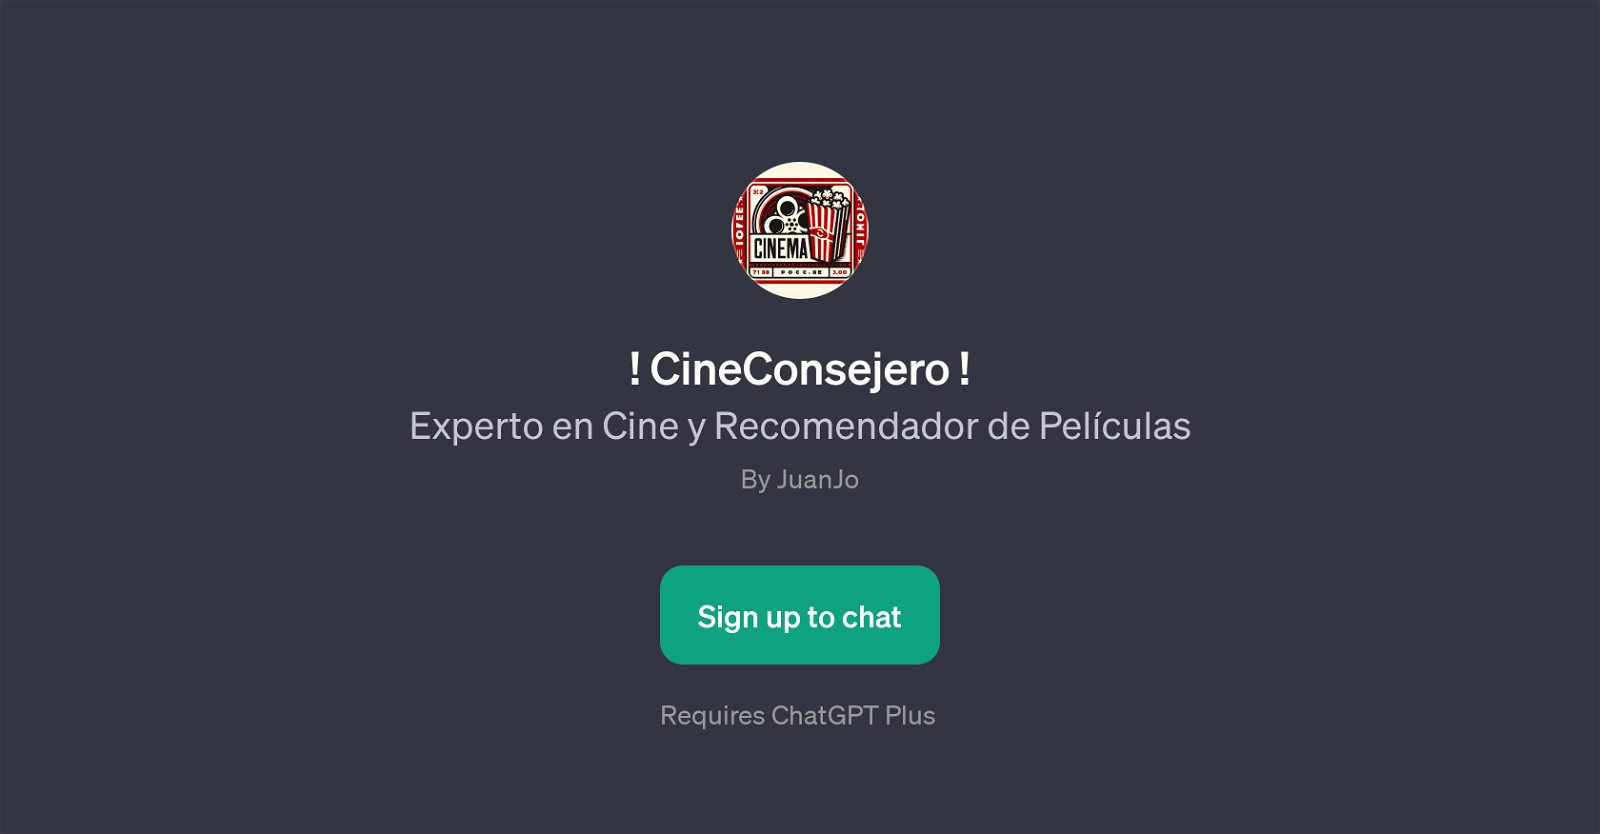 ! CineConsejero ! website